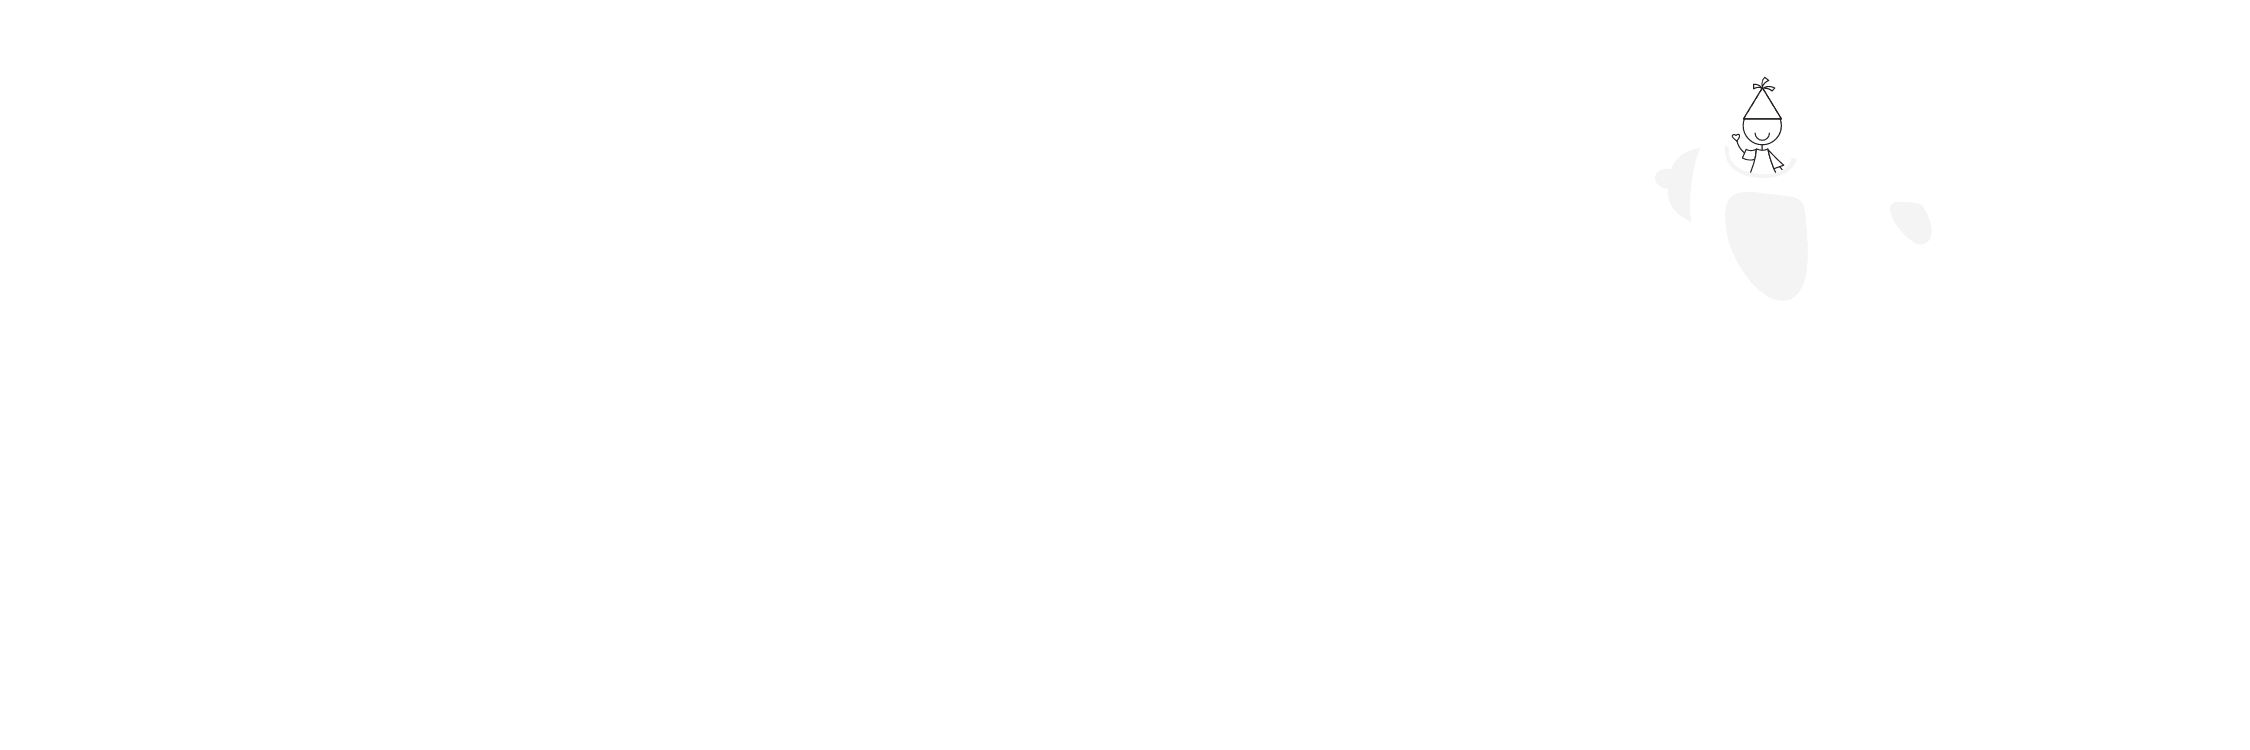 BromleyParentingHub_Logo_White